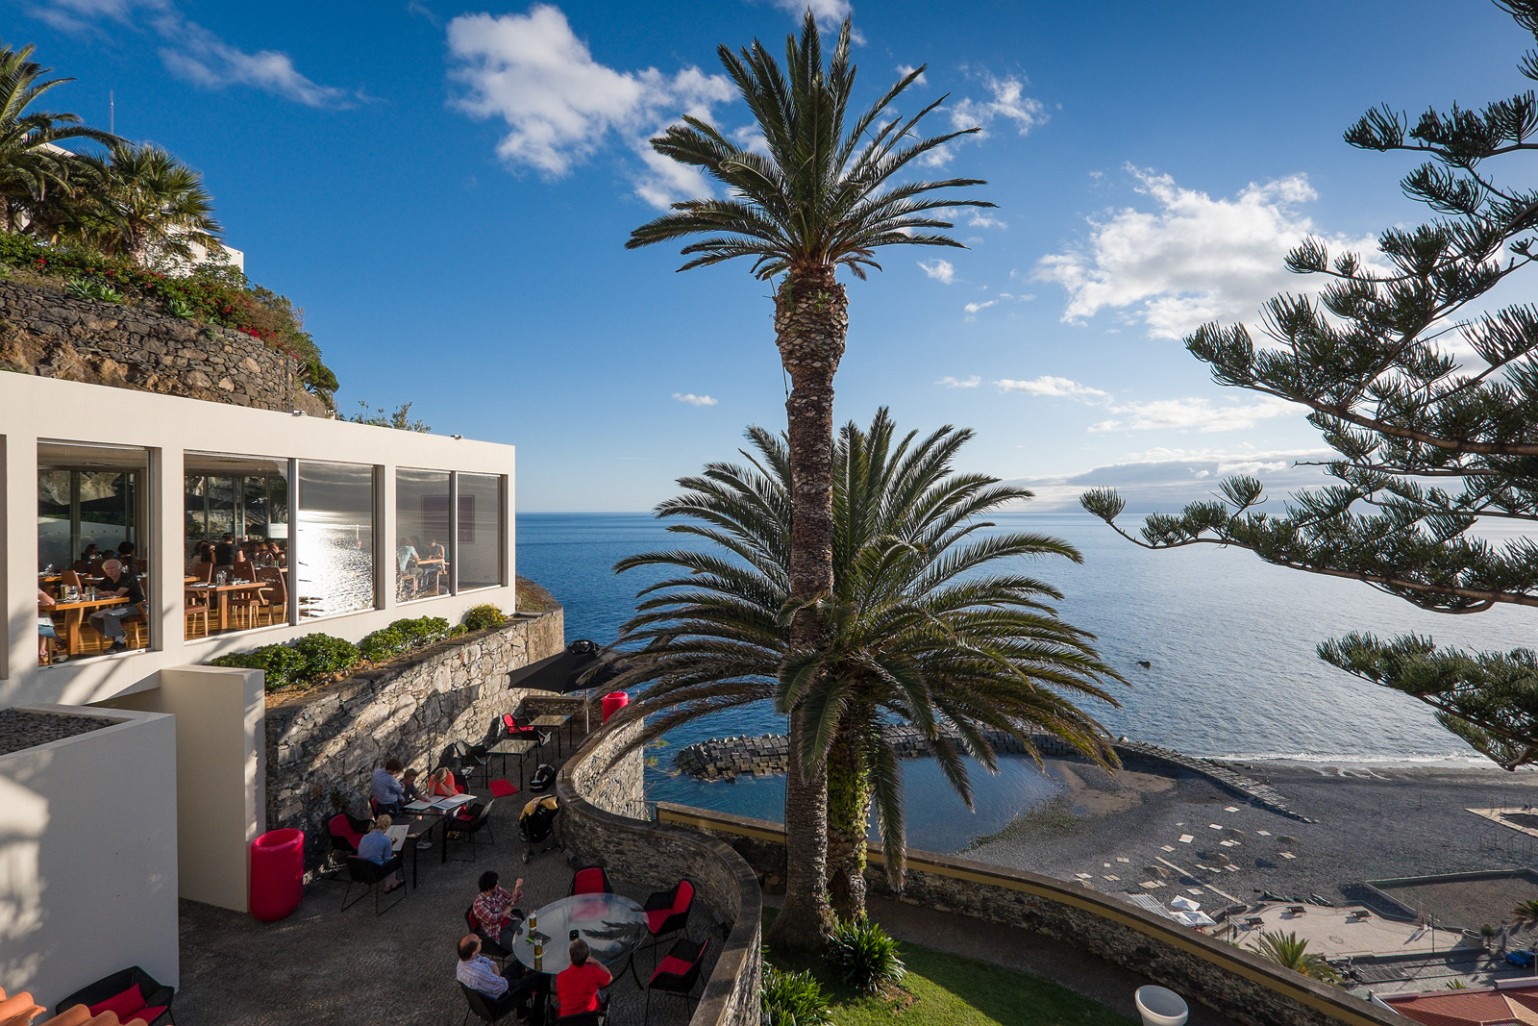 Hotel_Restaurant-aussen_0942_Madeira_10mm_7,1_LR54_web